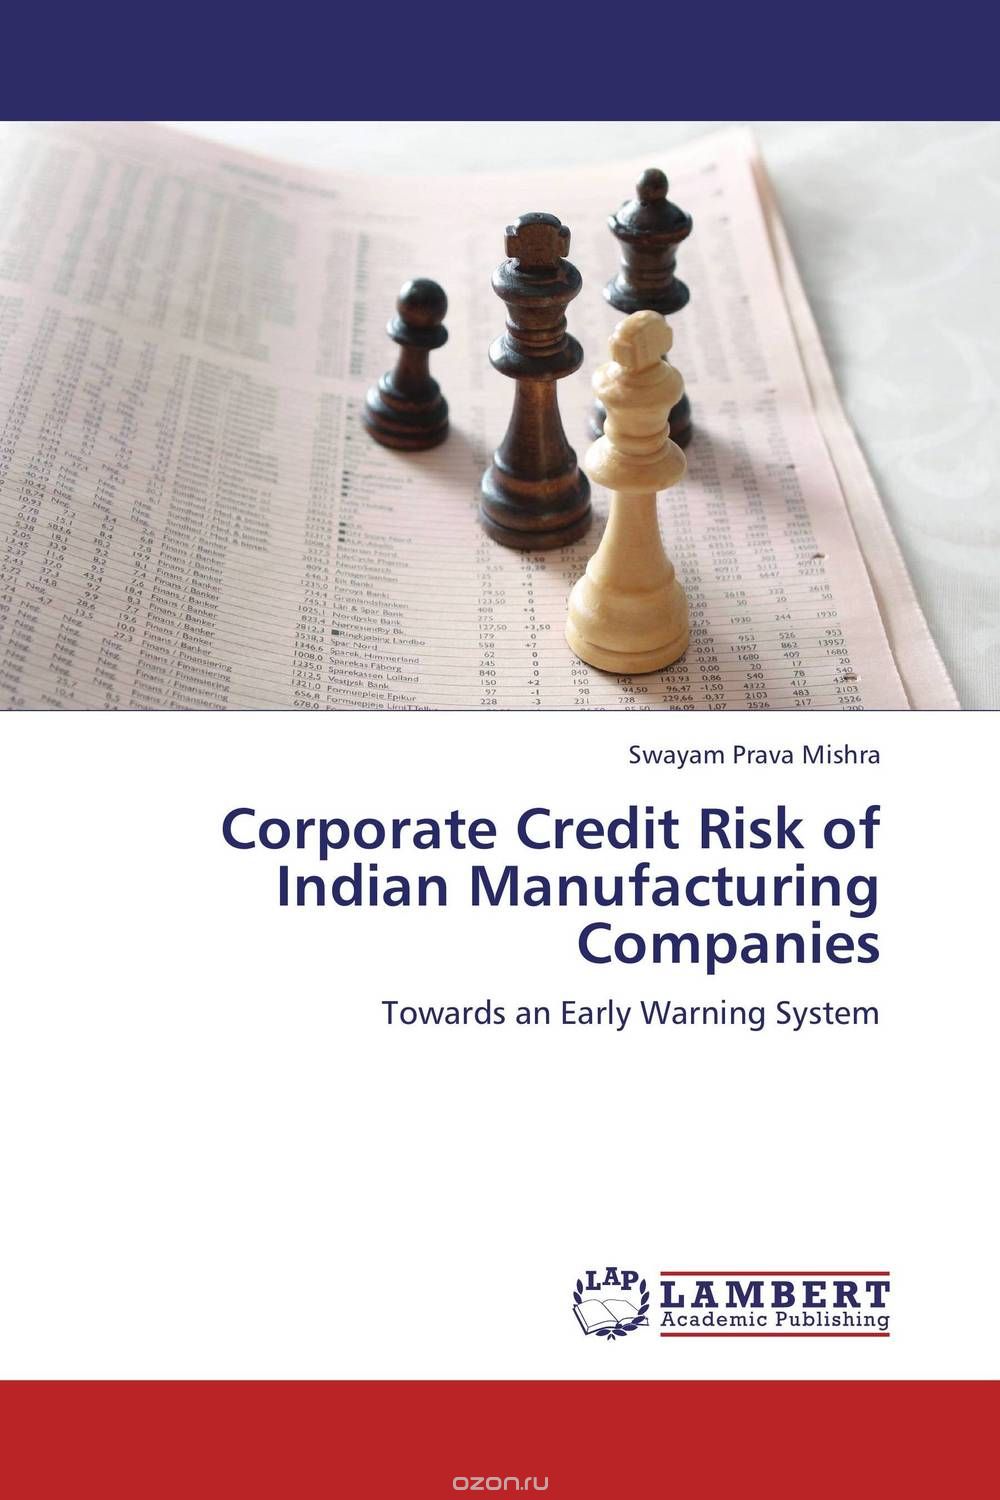 Скачать книгу "Corporate Credit Risk of Indian Manufacturing Companies"